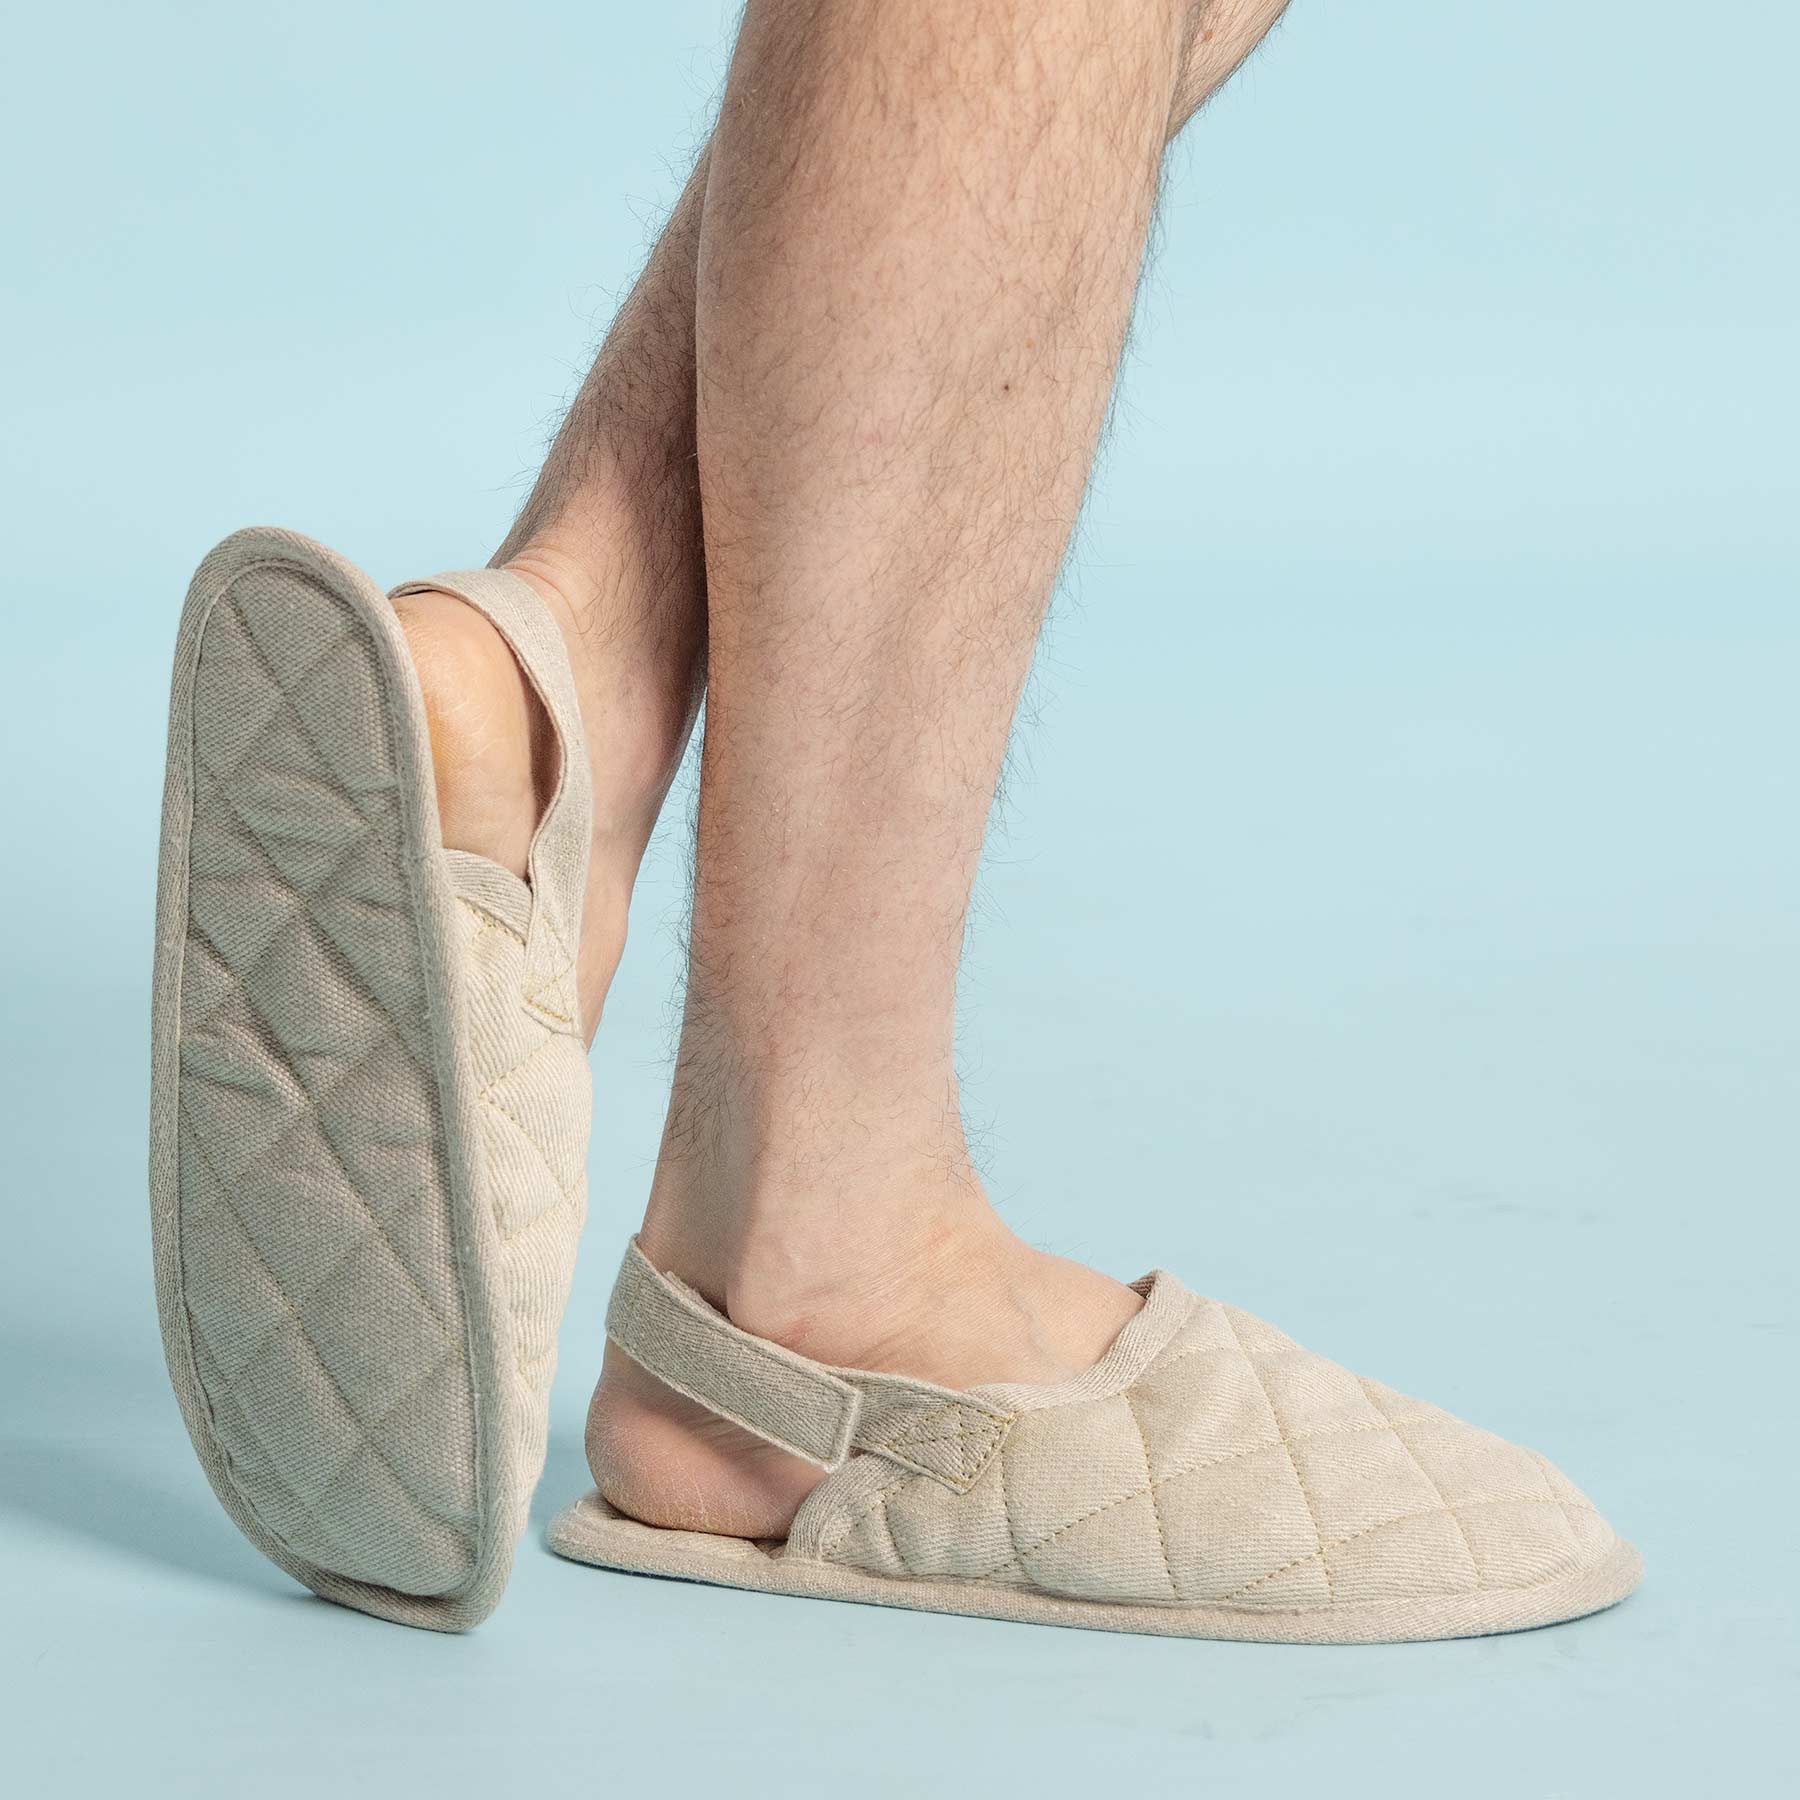 Sure Design Natural Hemp Slipper Sandals